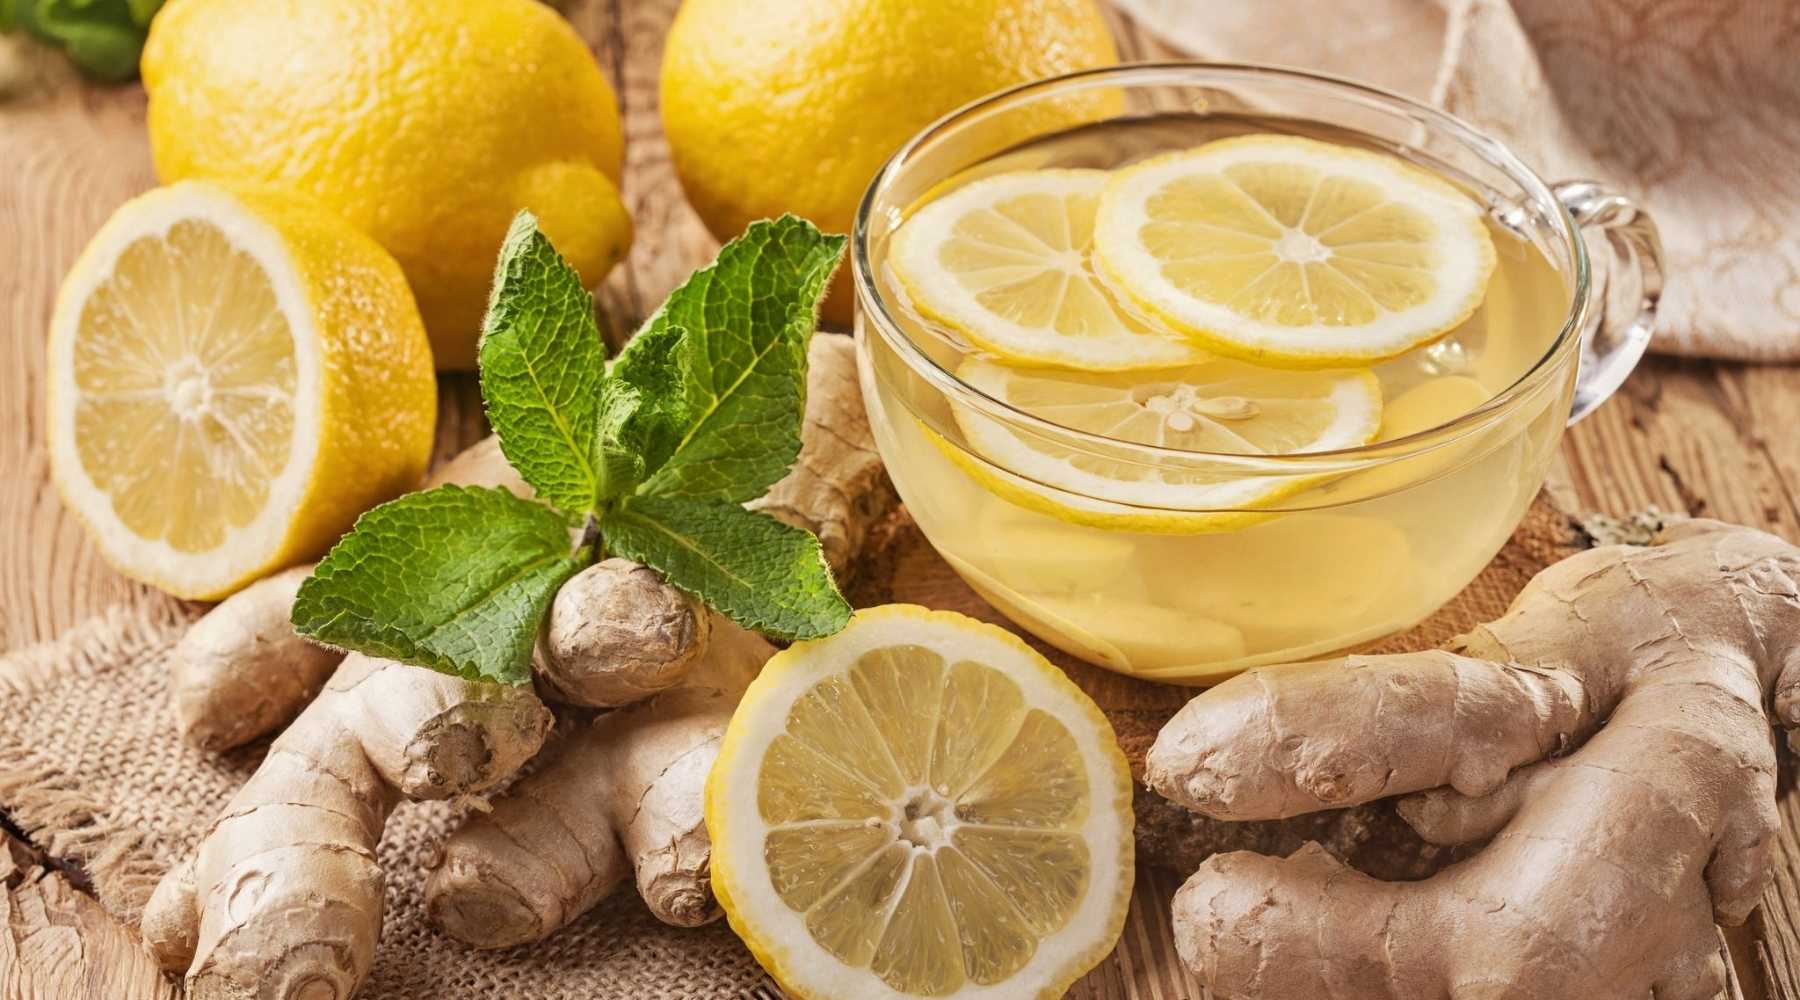 Restorative Ginger and Lemon Tea